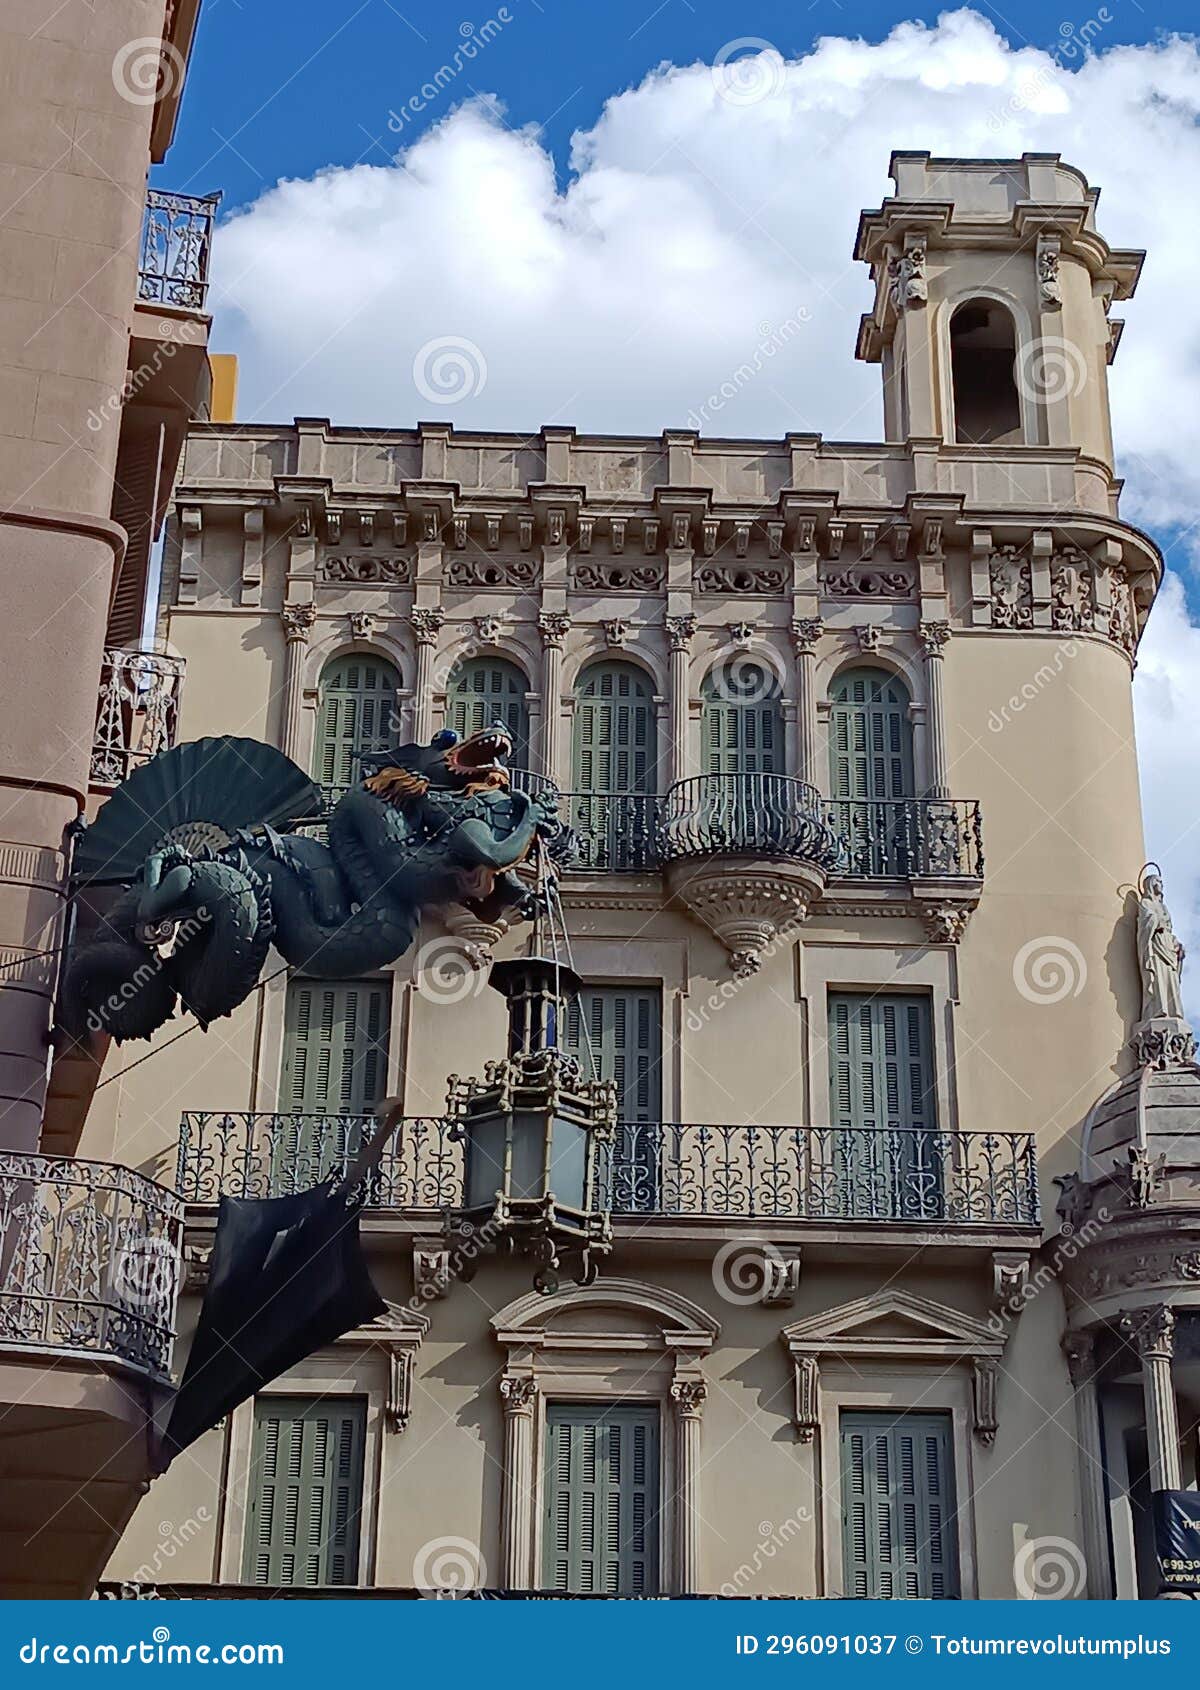 the house of the umbrellas, las ramplas, barcelona, spain.